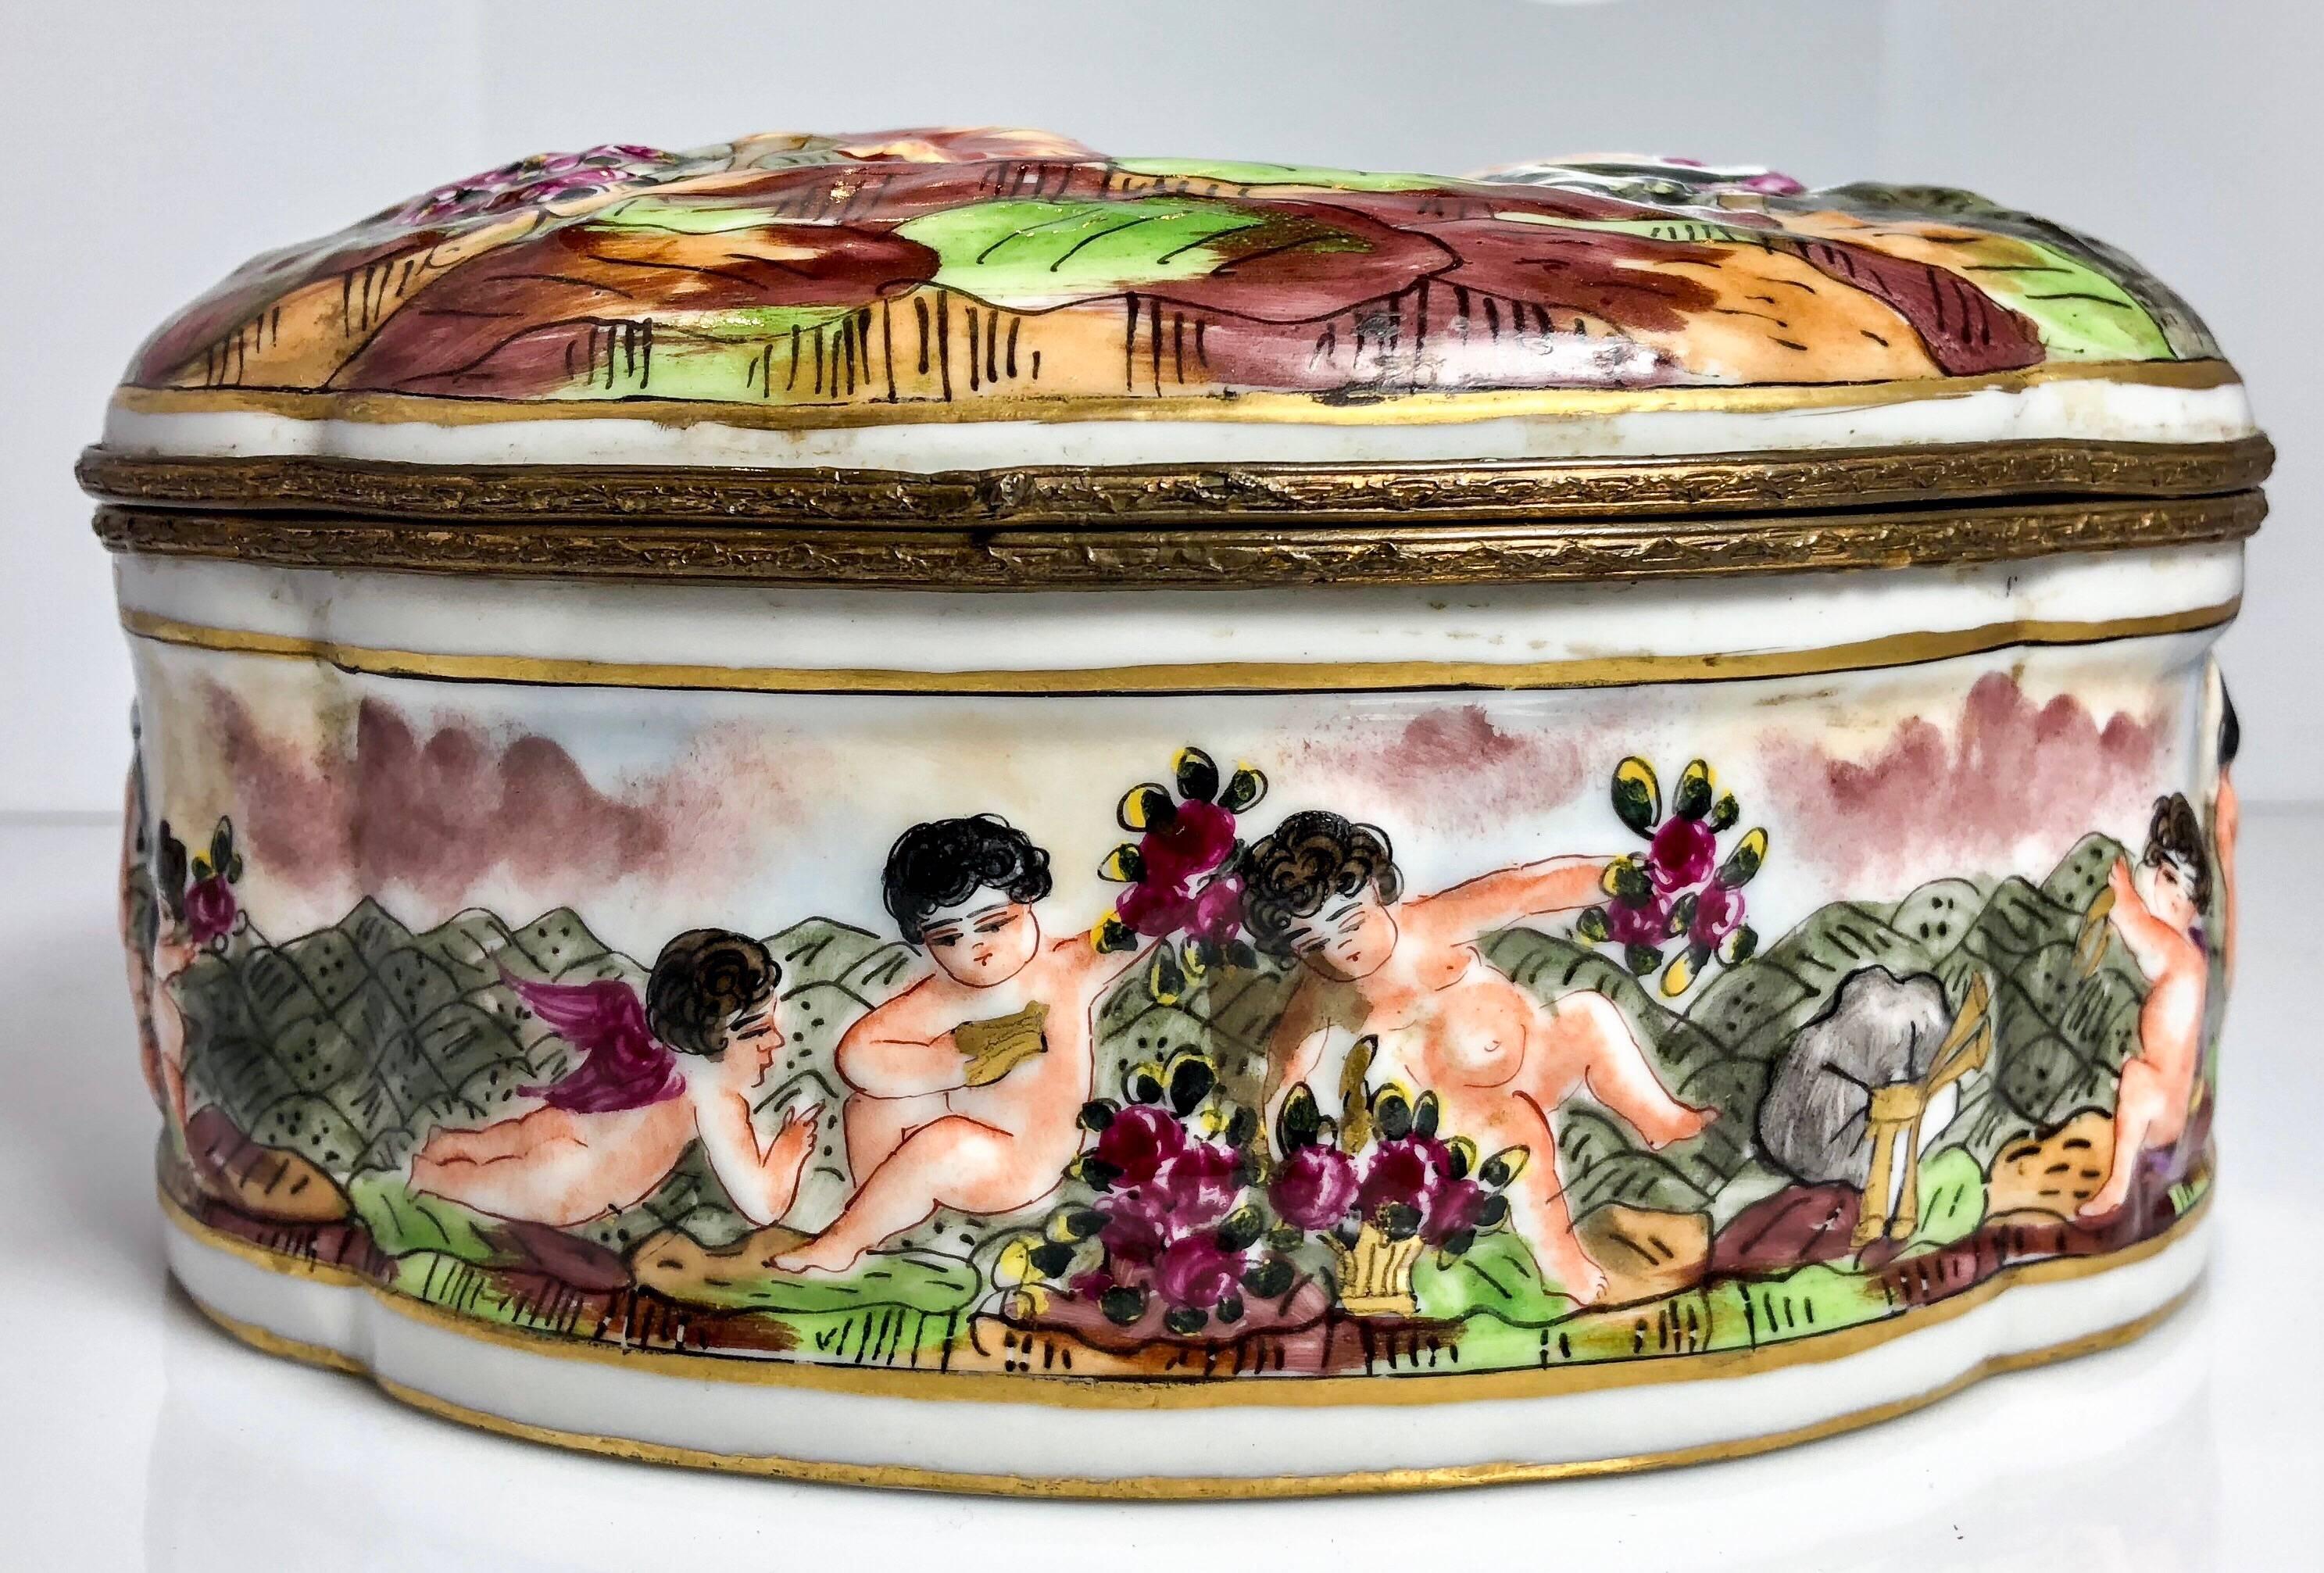 Antique French porcelain jewel box in the Capo Di Monte style, circa 1890.